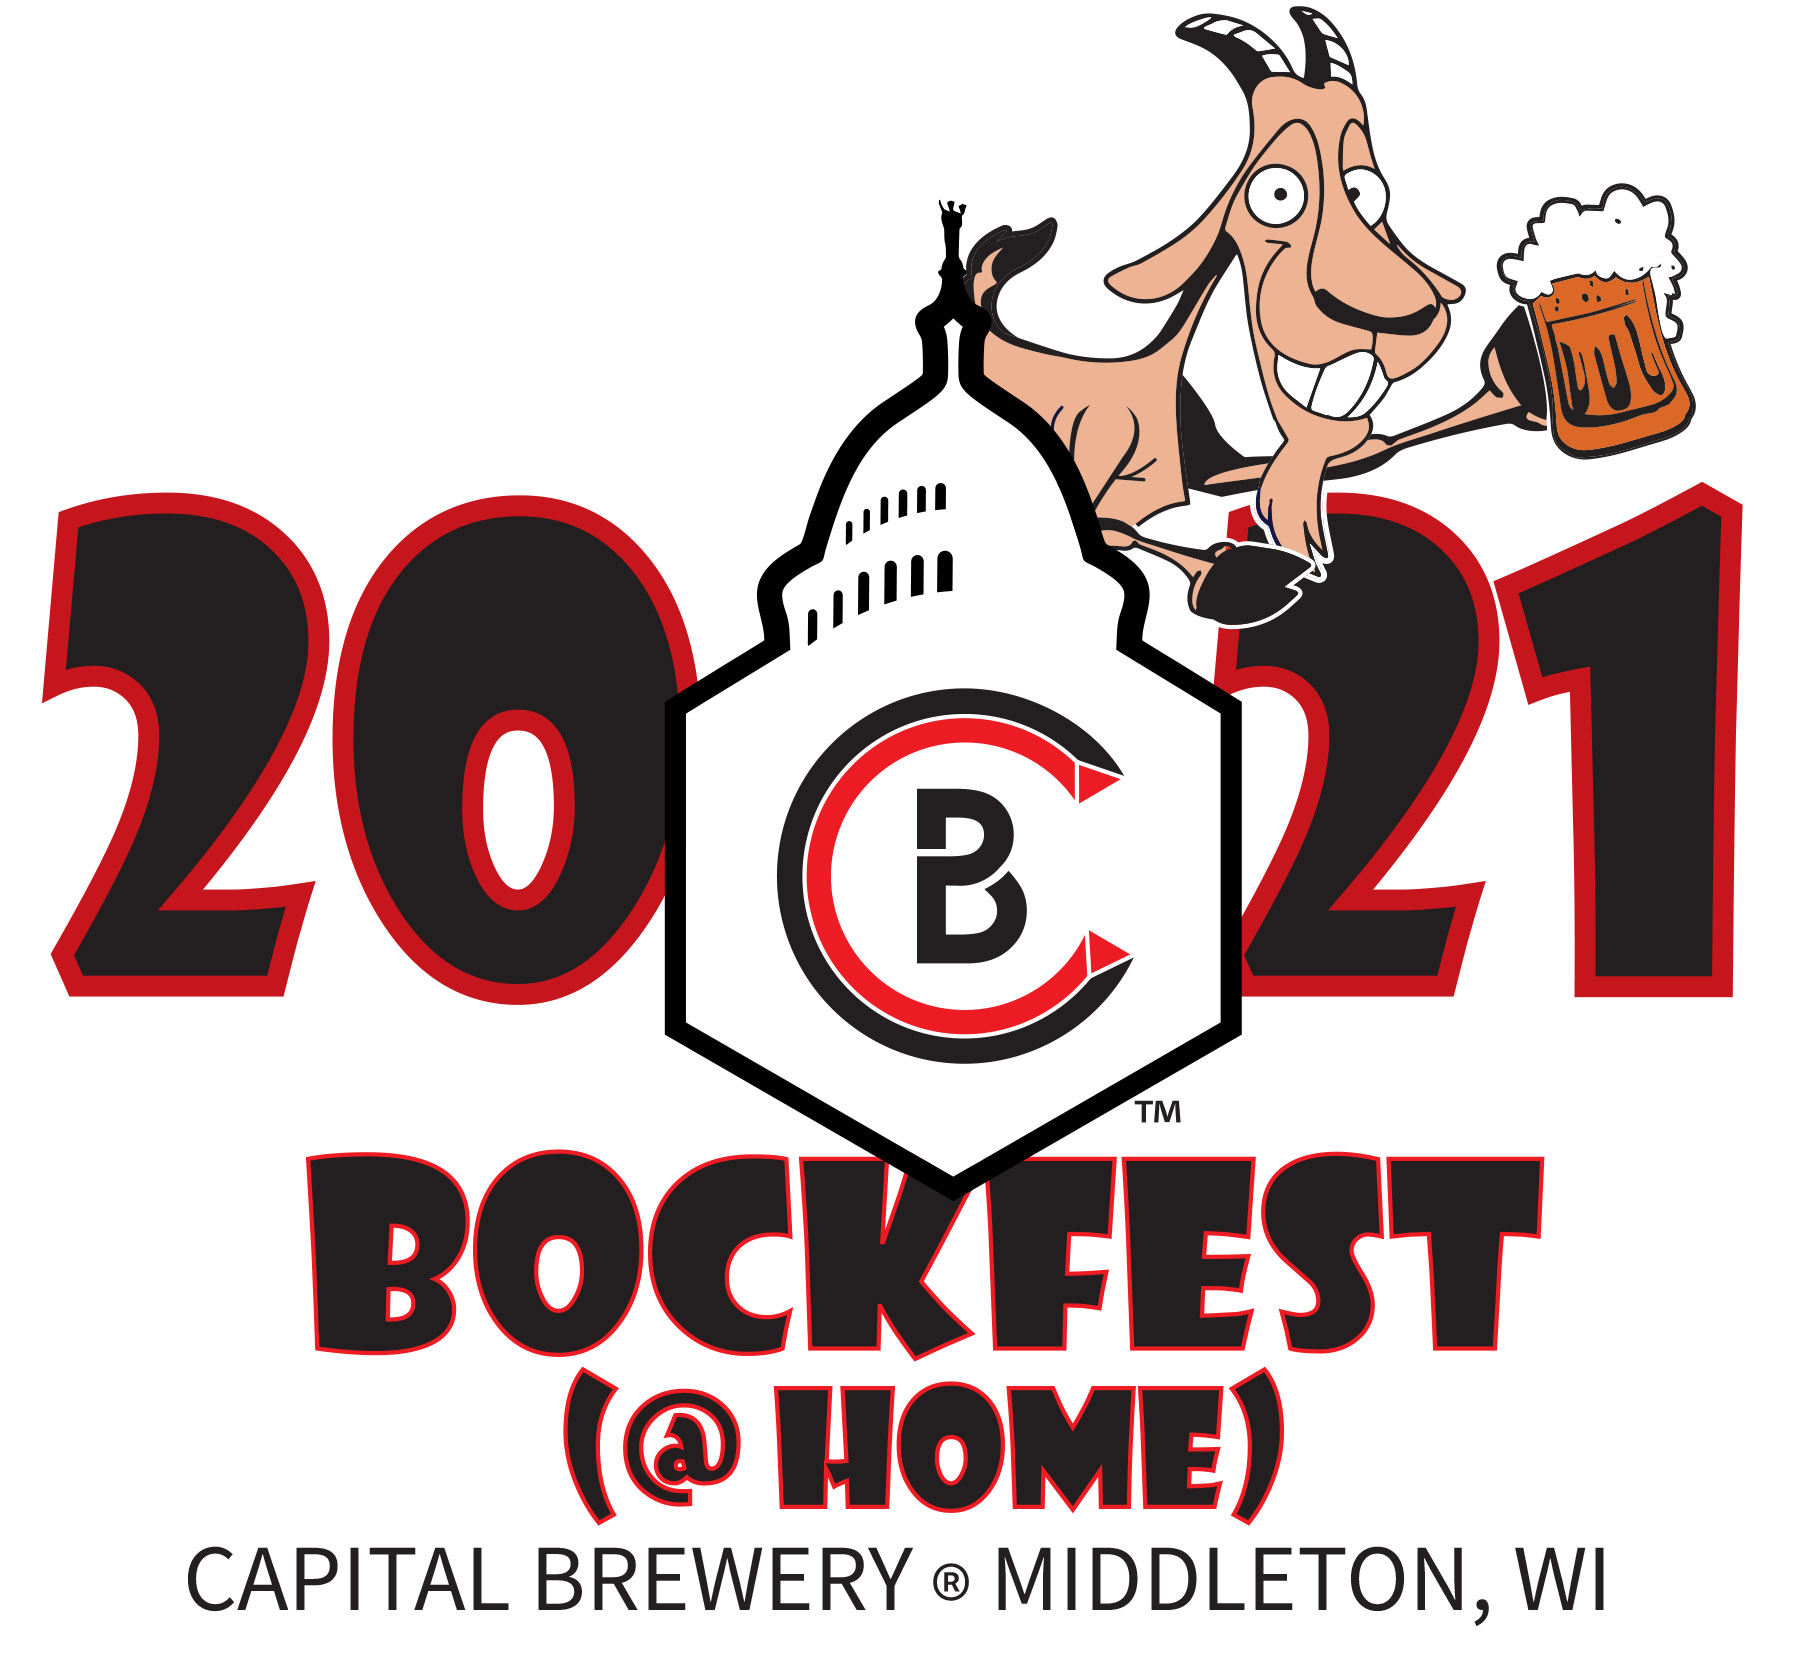 Bockfest 2021 @ Home - Capital Brewery